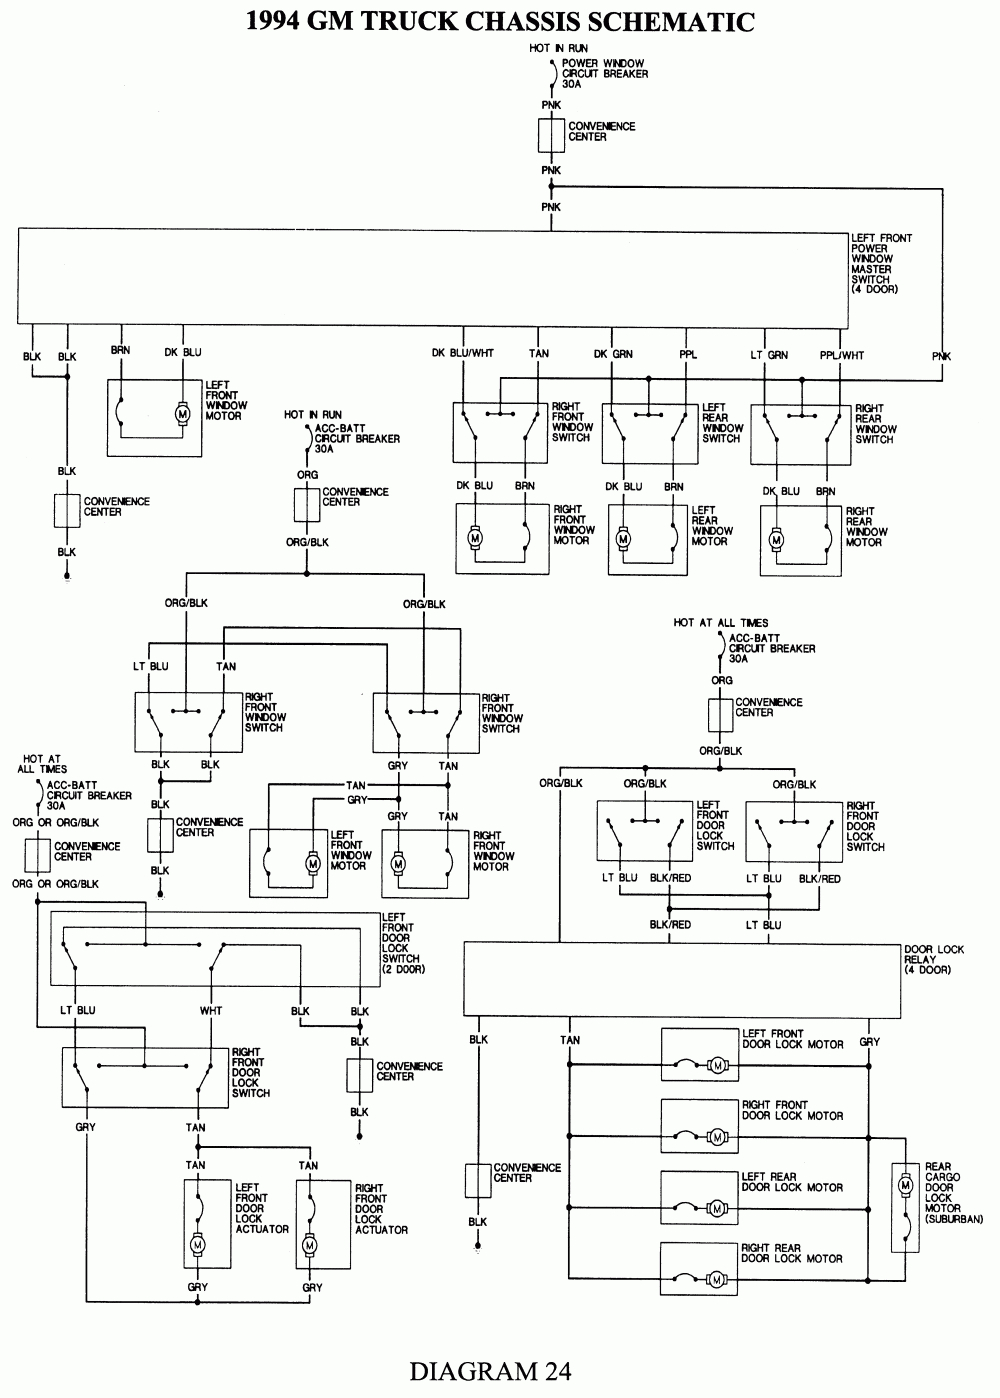 Chevy 94 Wiring Diagram - Wiring Diagram Data - 1994 Chevy Truck Wiring Diagram Free